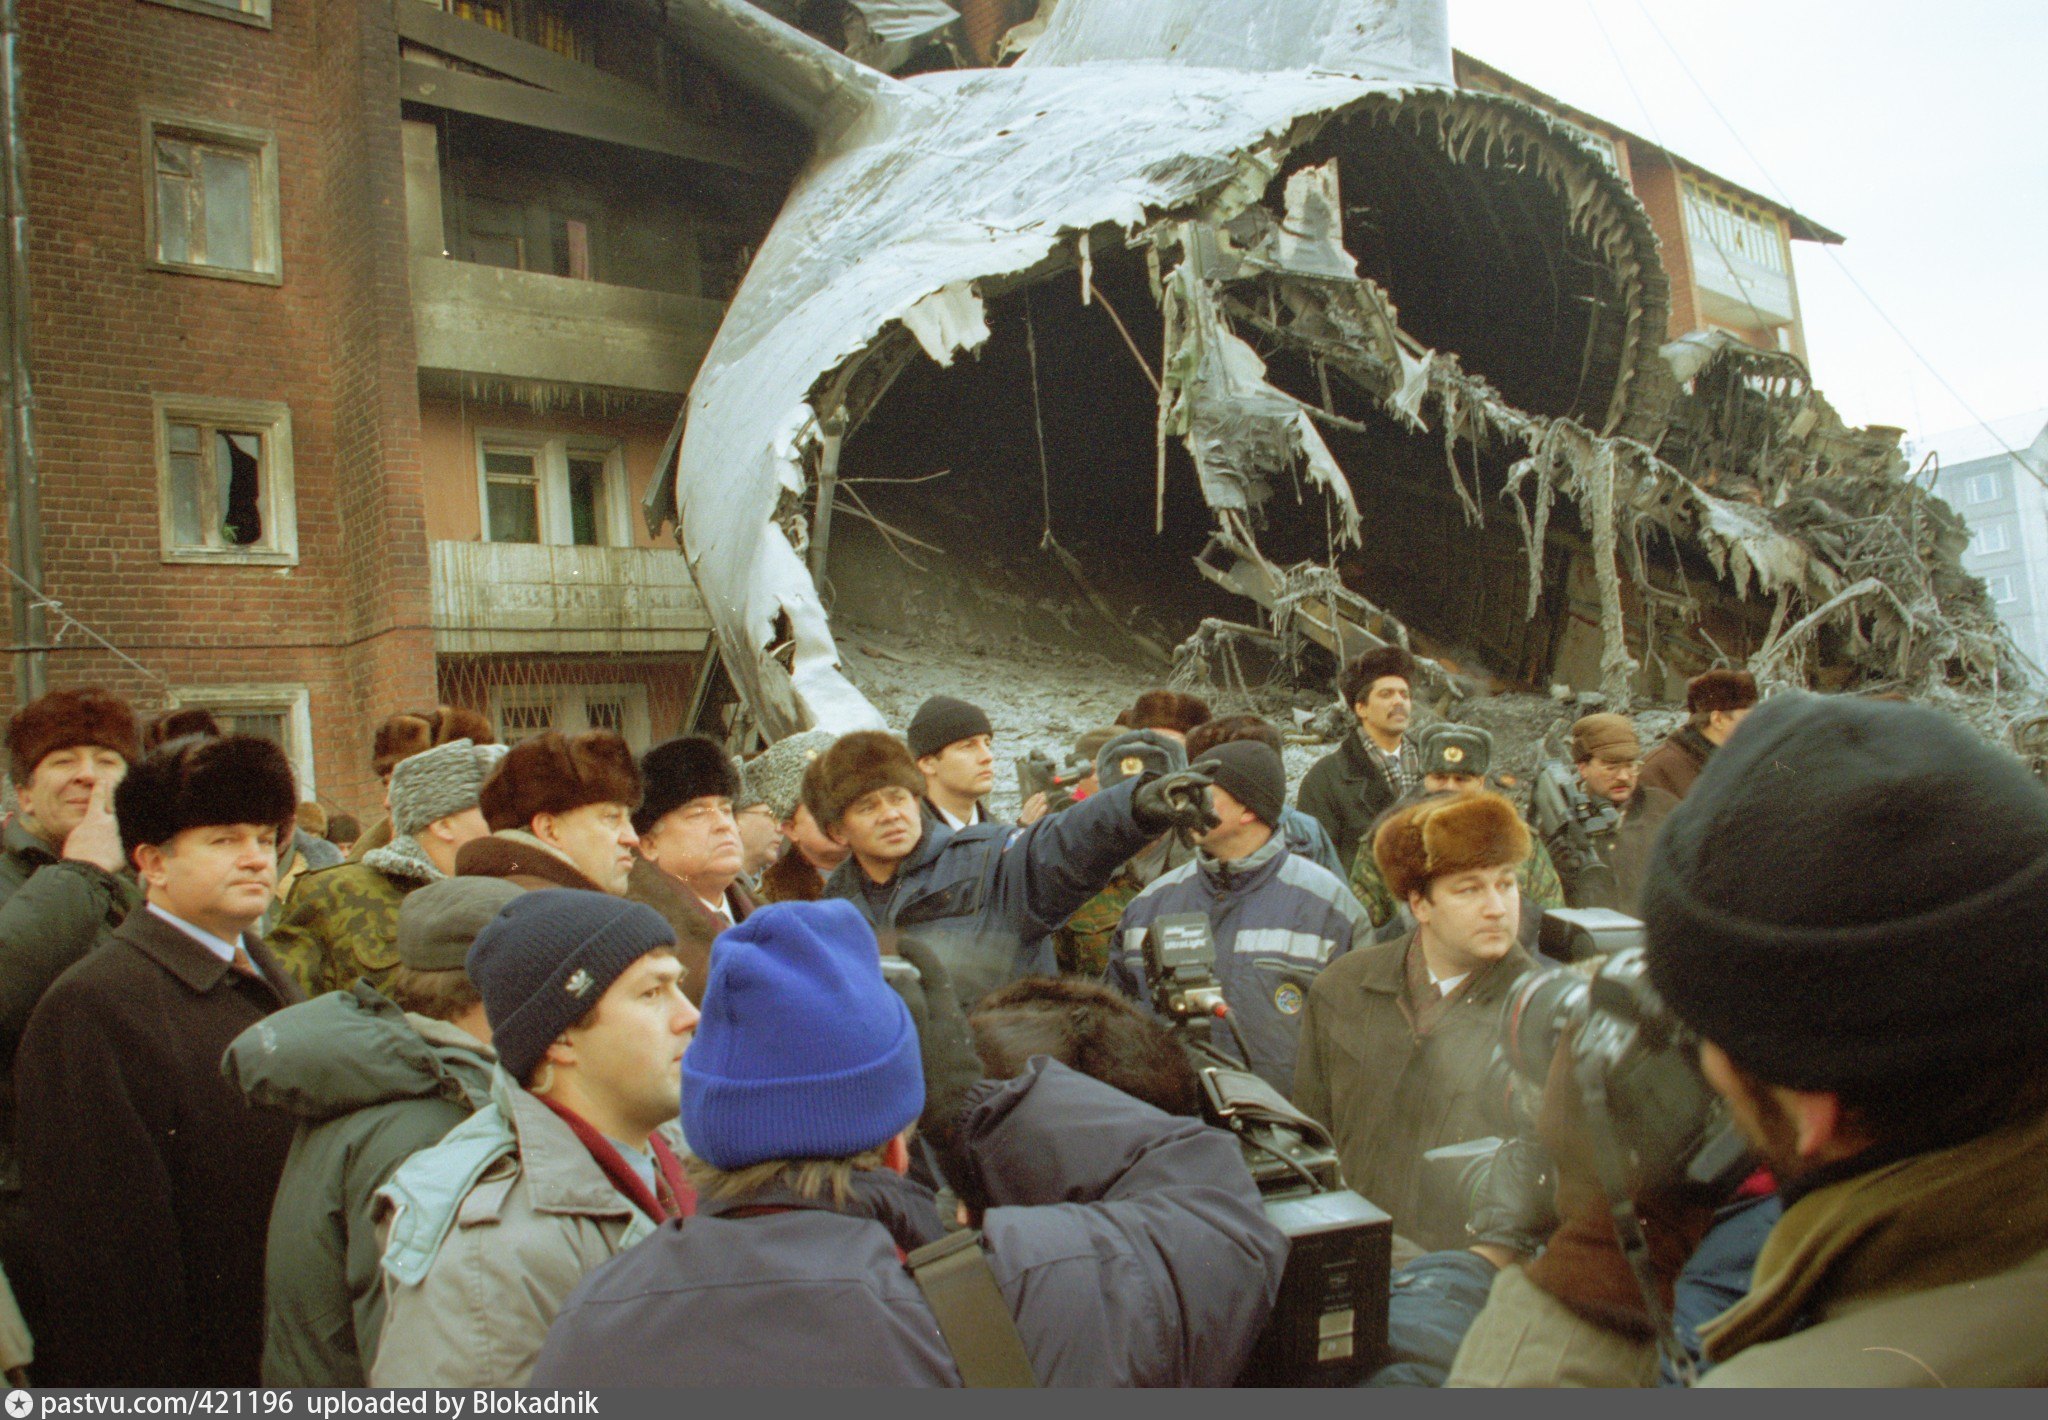 Авиакатастрофа 1997. Катастрофа АН-124 В Иркутске. 6 Декабря 1997 авиакатастрофа АН-124 В Иркутске.